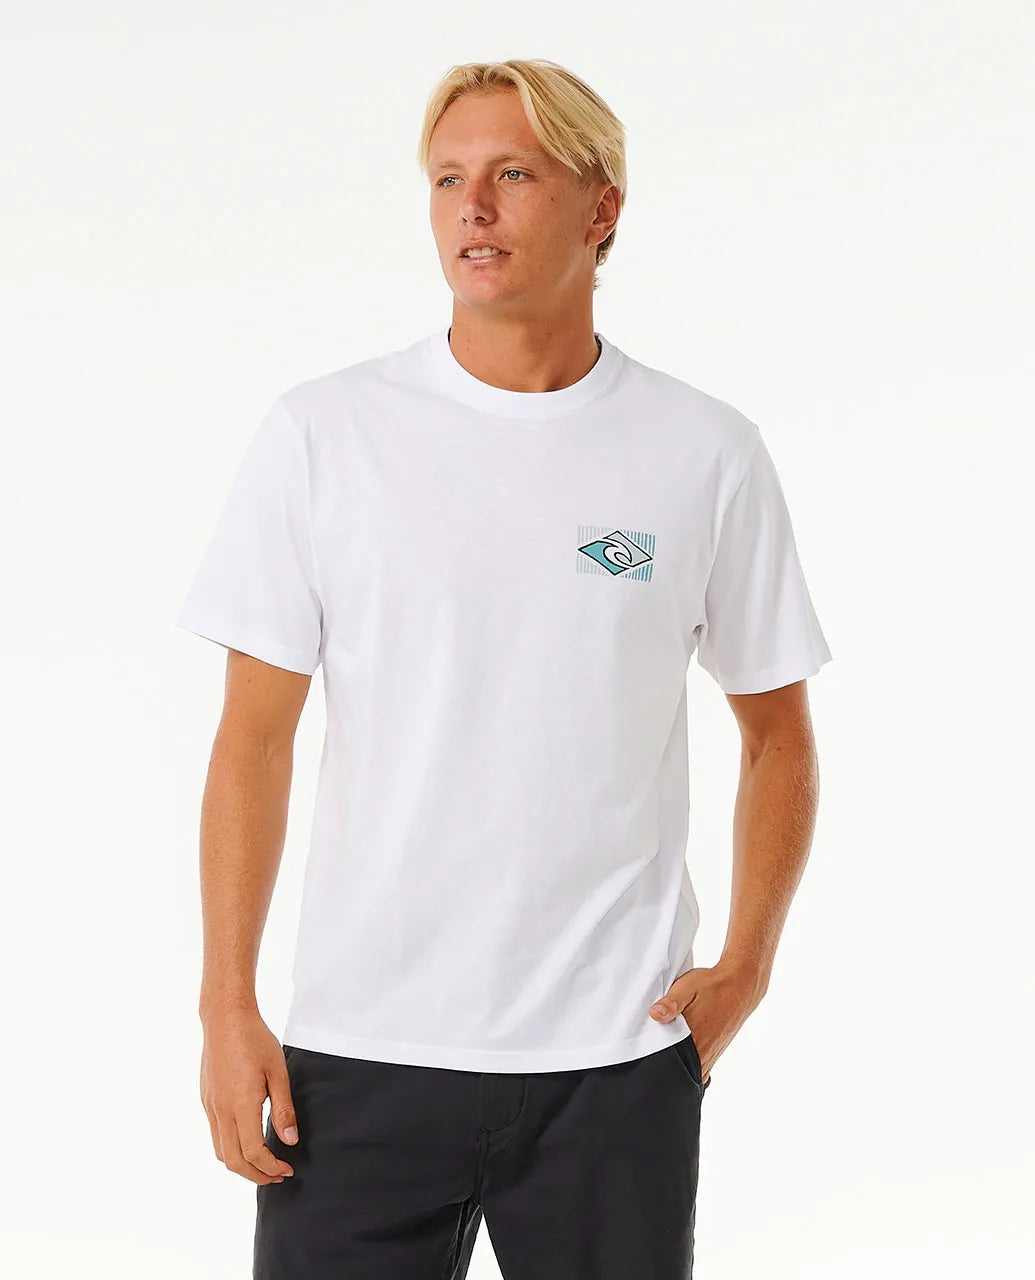 Ripcurl Traditions Premium Tee - White Mens T Shirt